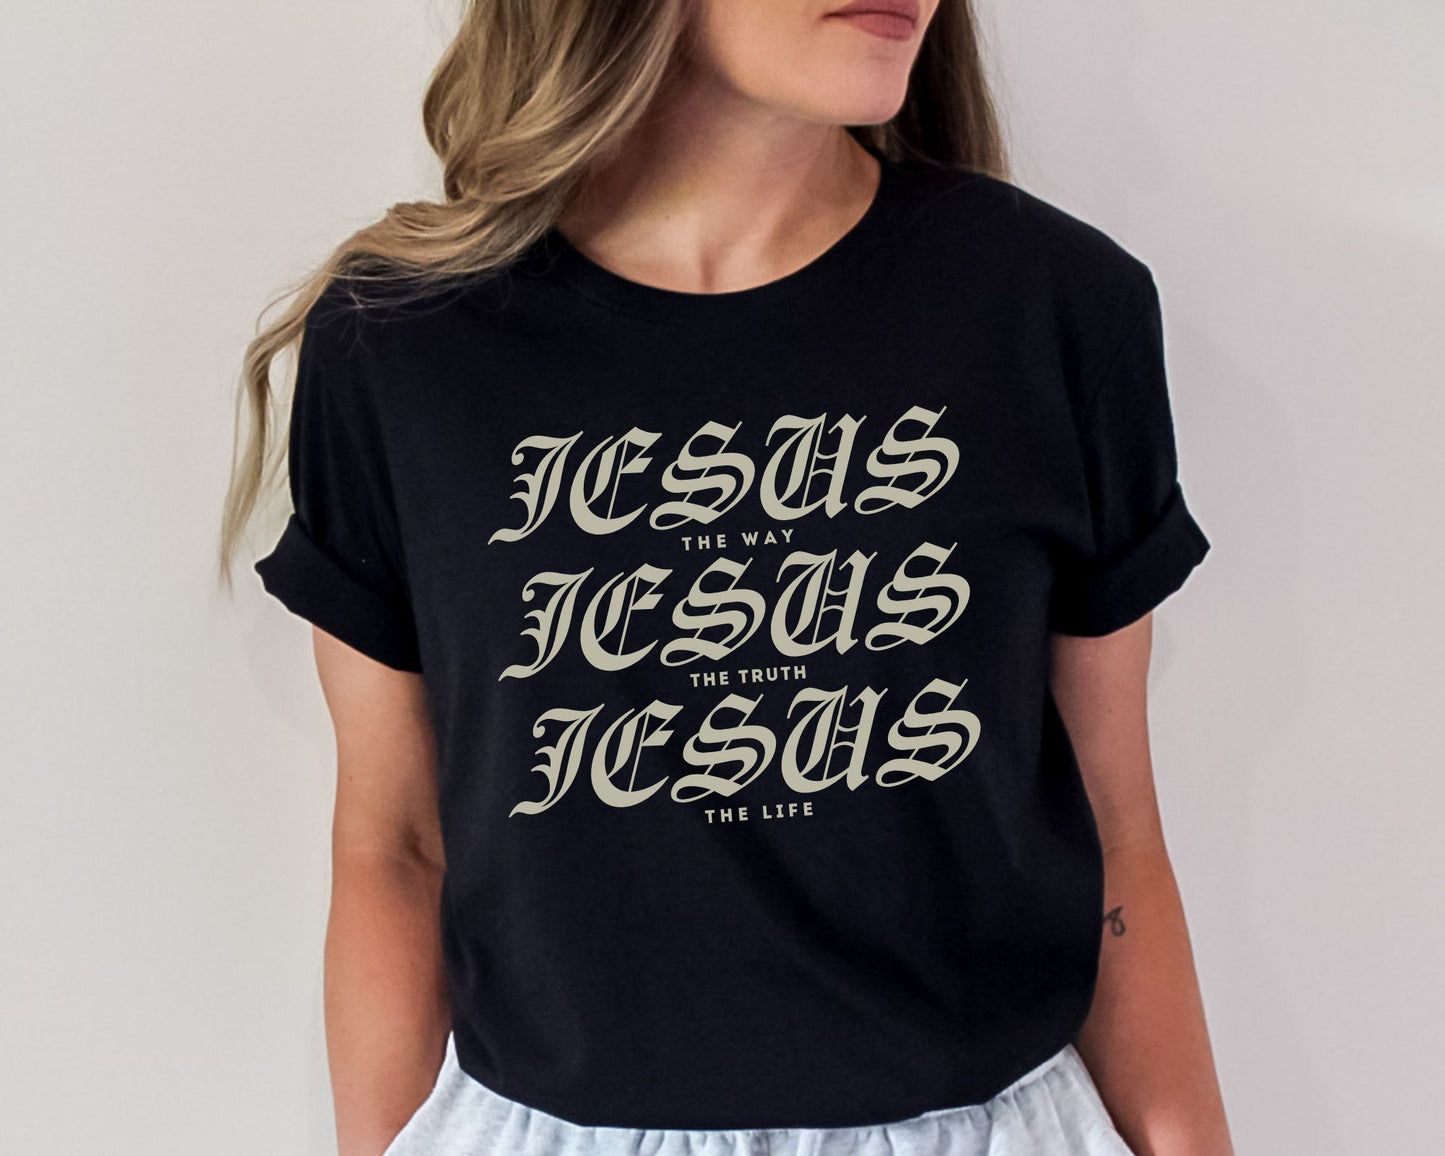 Jesus Way Truth Life Womens T-Shirt